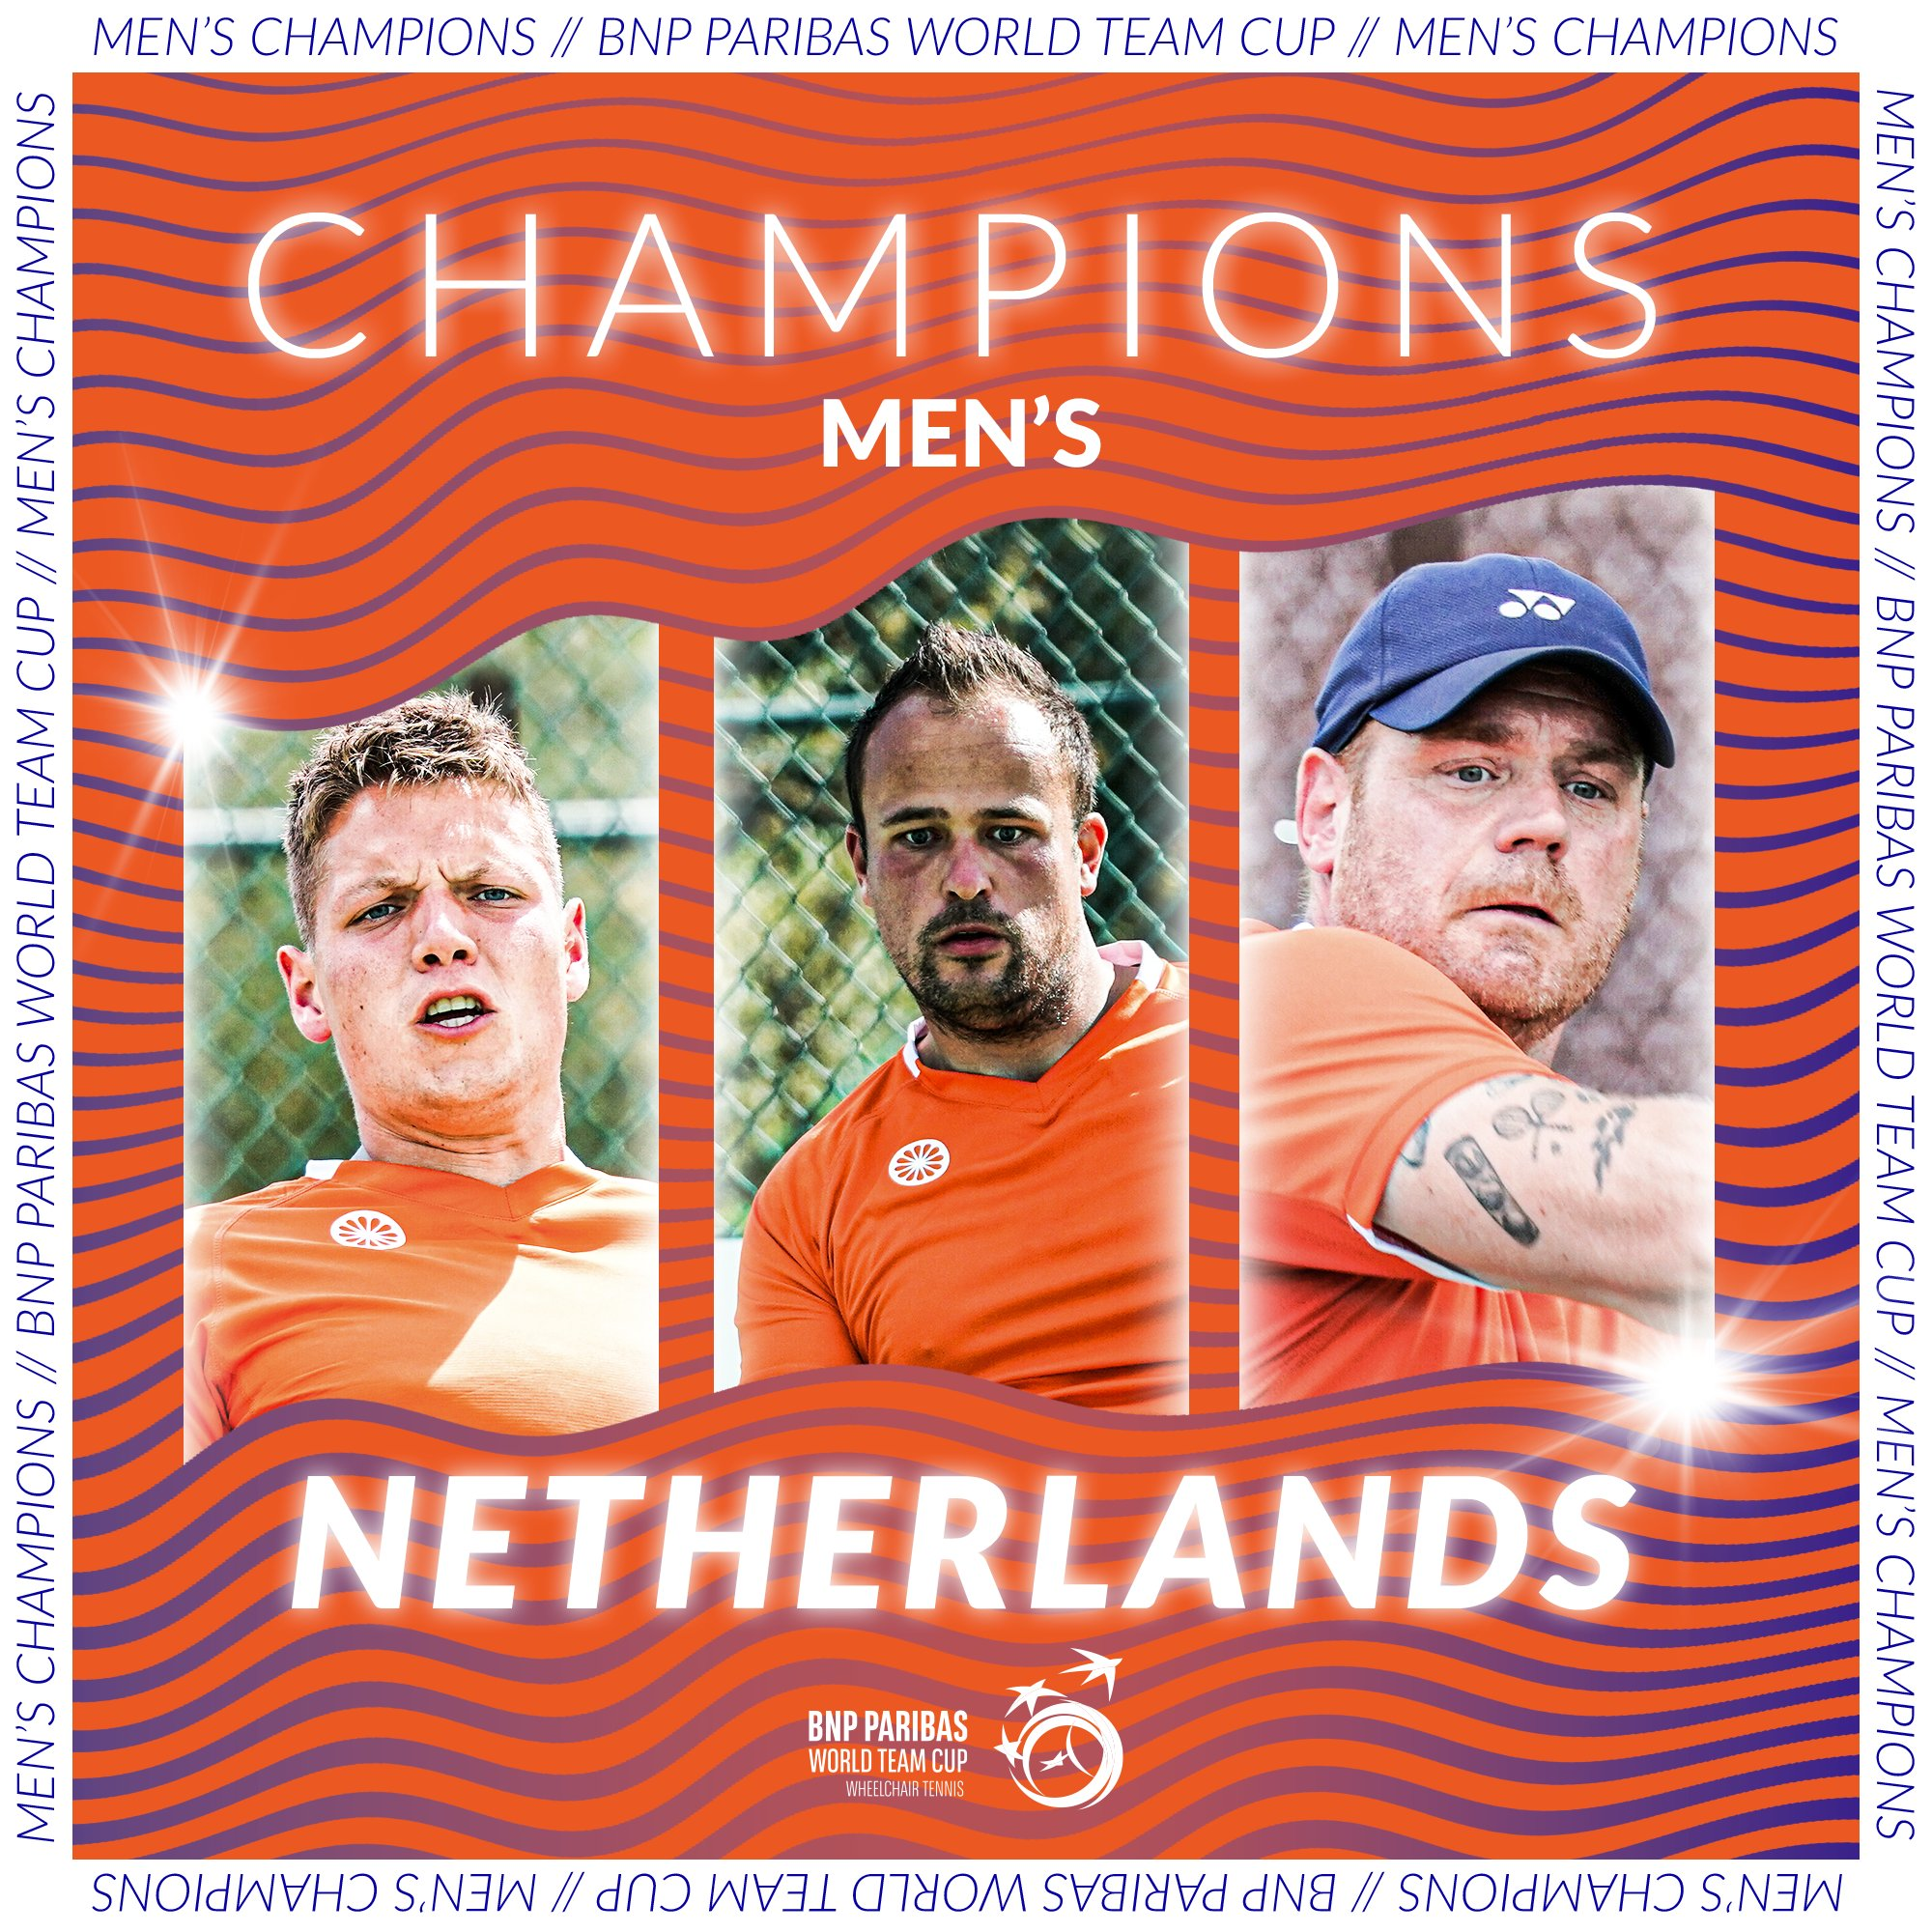 Netherlands retain men's title at Wheelchair Tennis World Team Cup